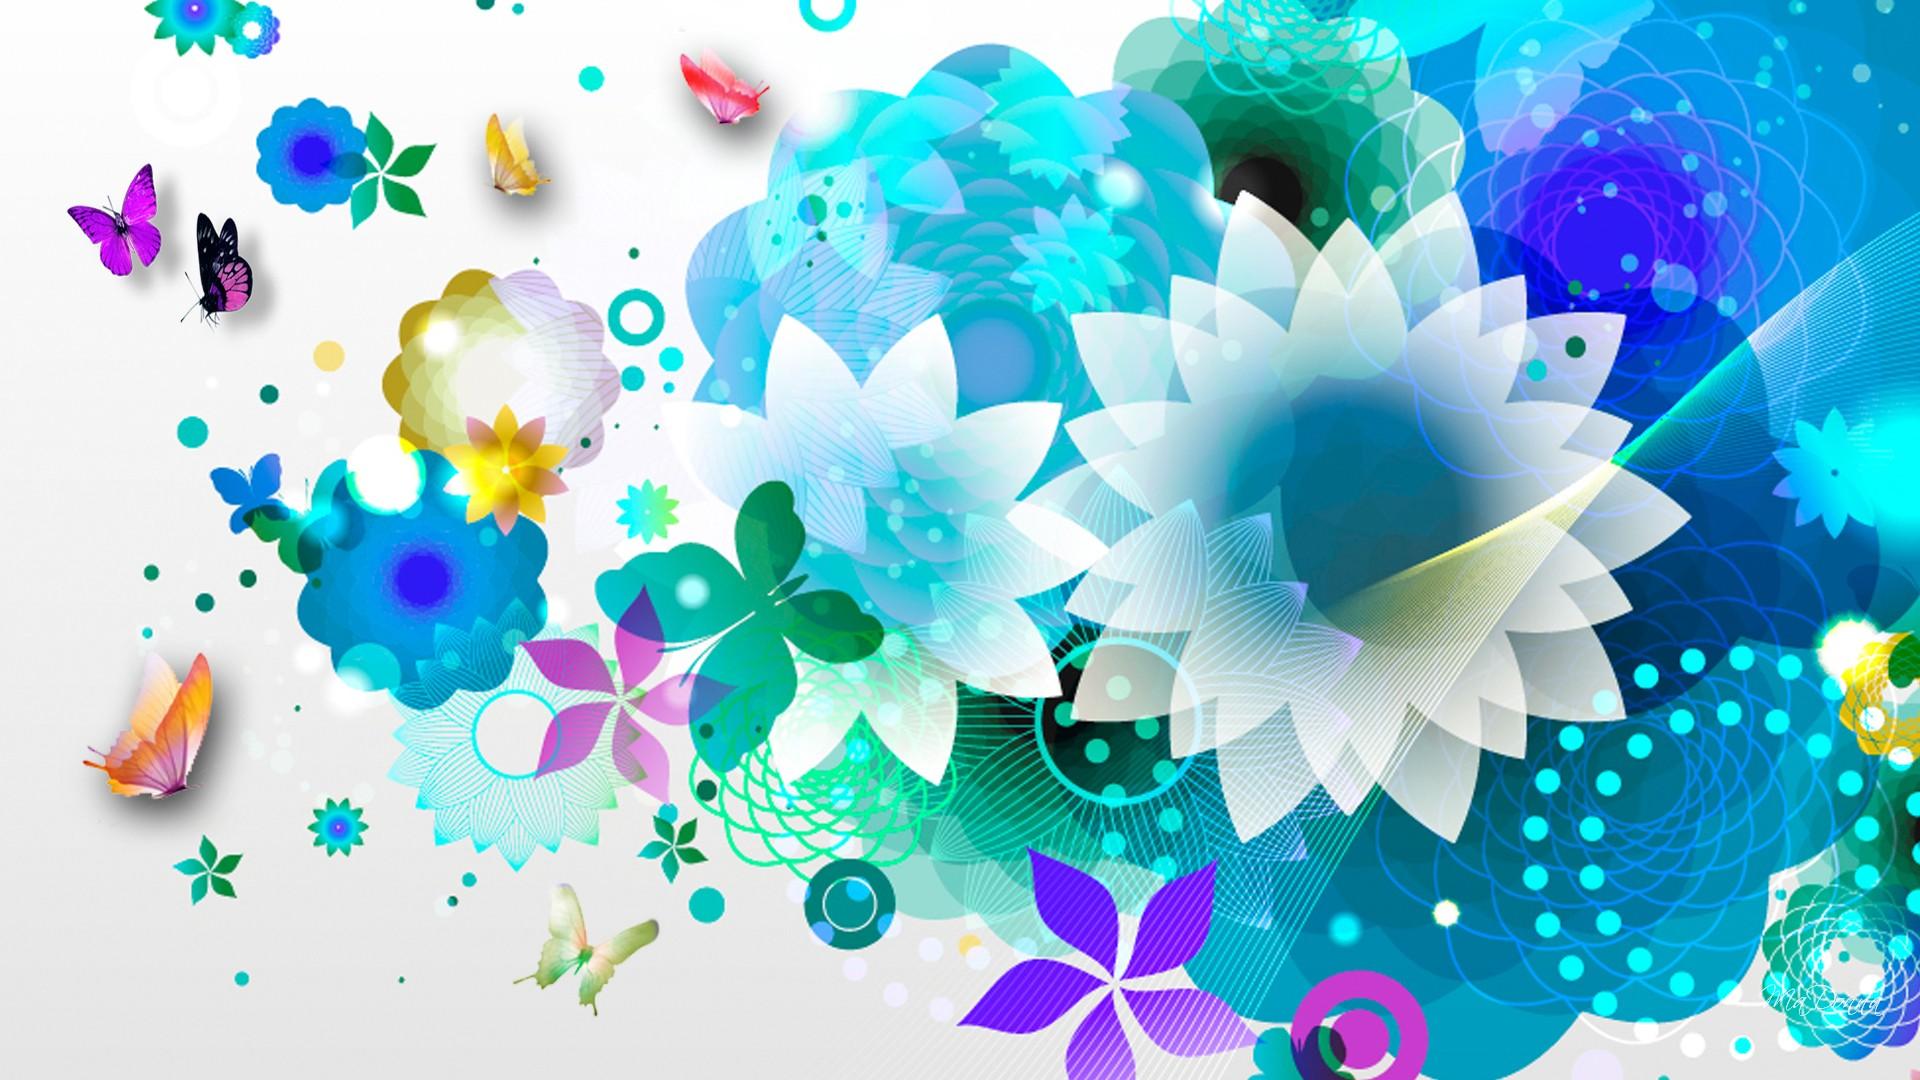 Cool abstract flower wallpaper HD